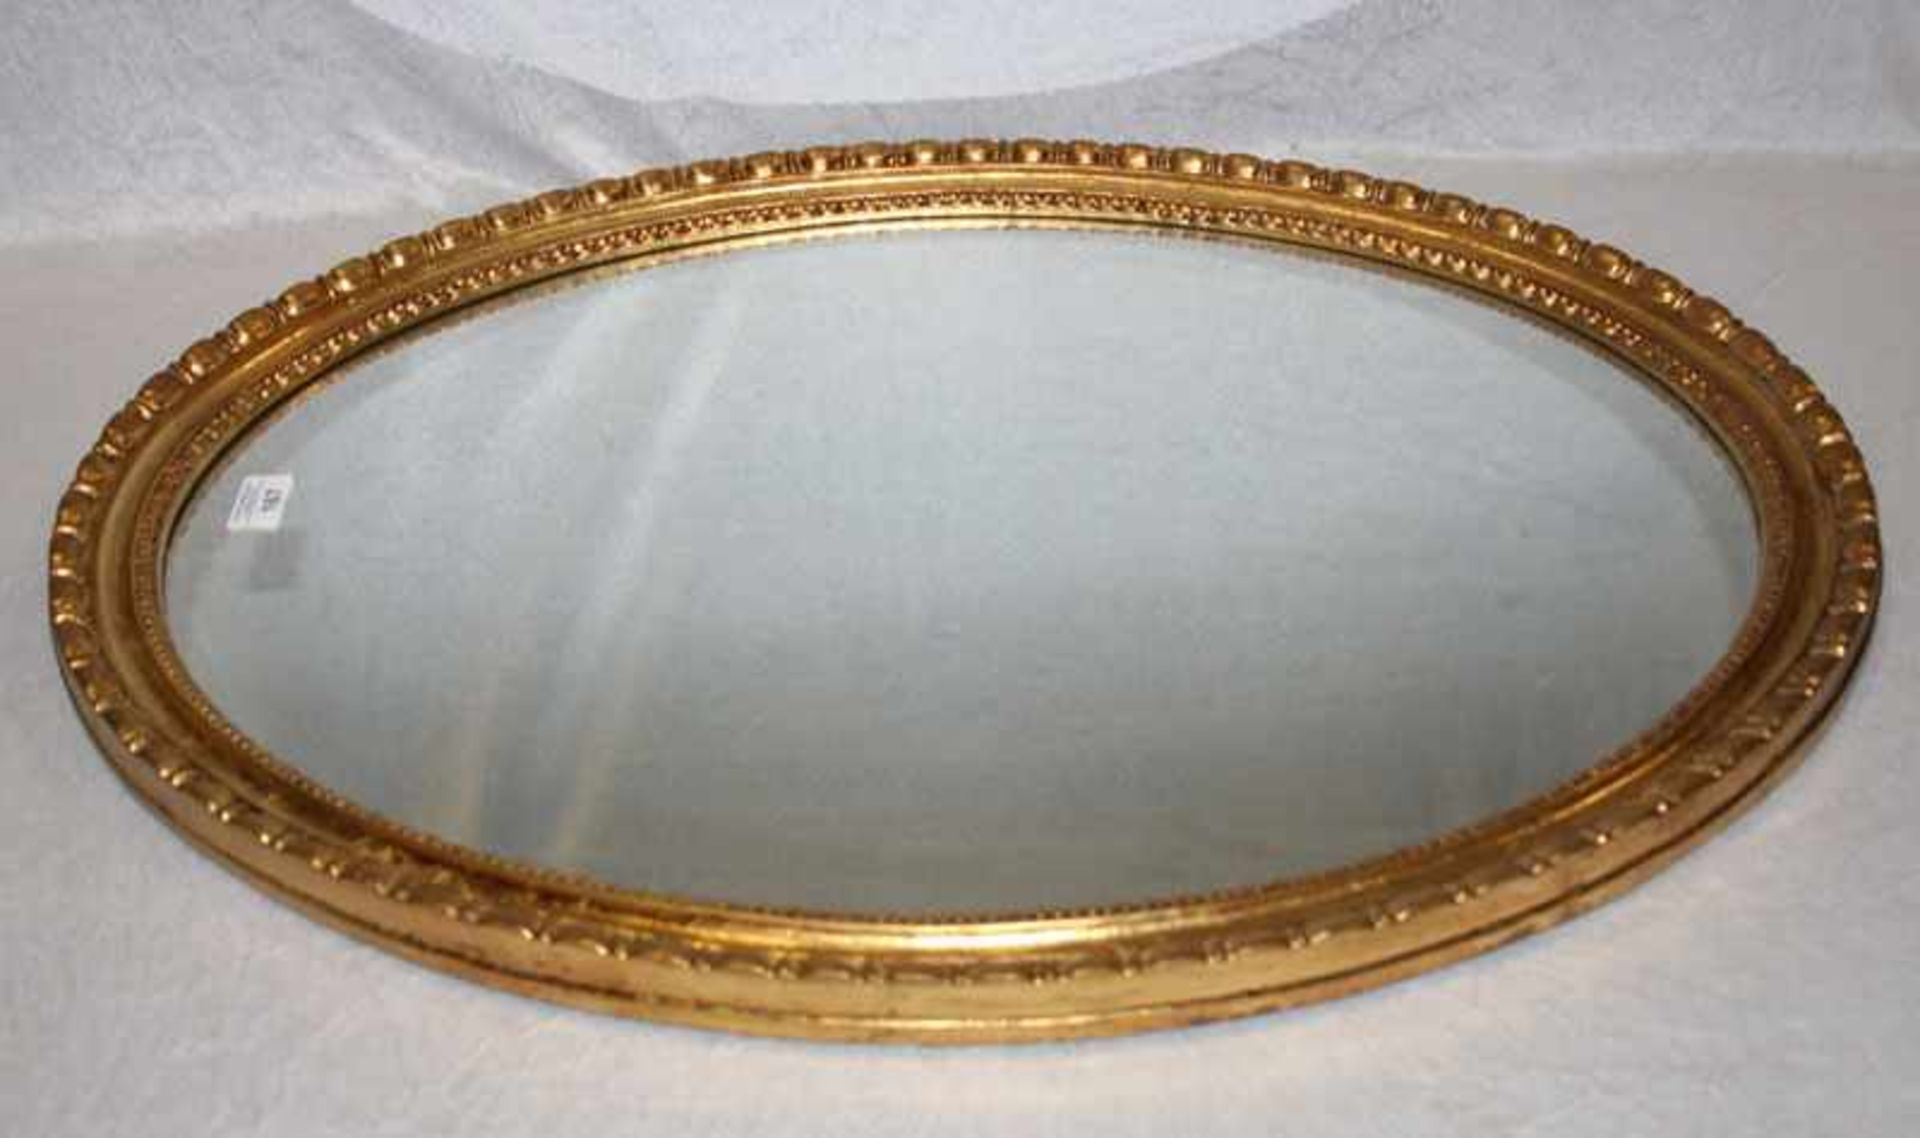 Ovaler Wandspiegel in Goldrahmen, H 83 cm x 57 cm